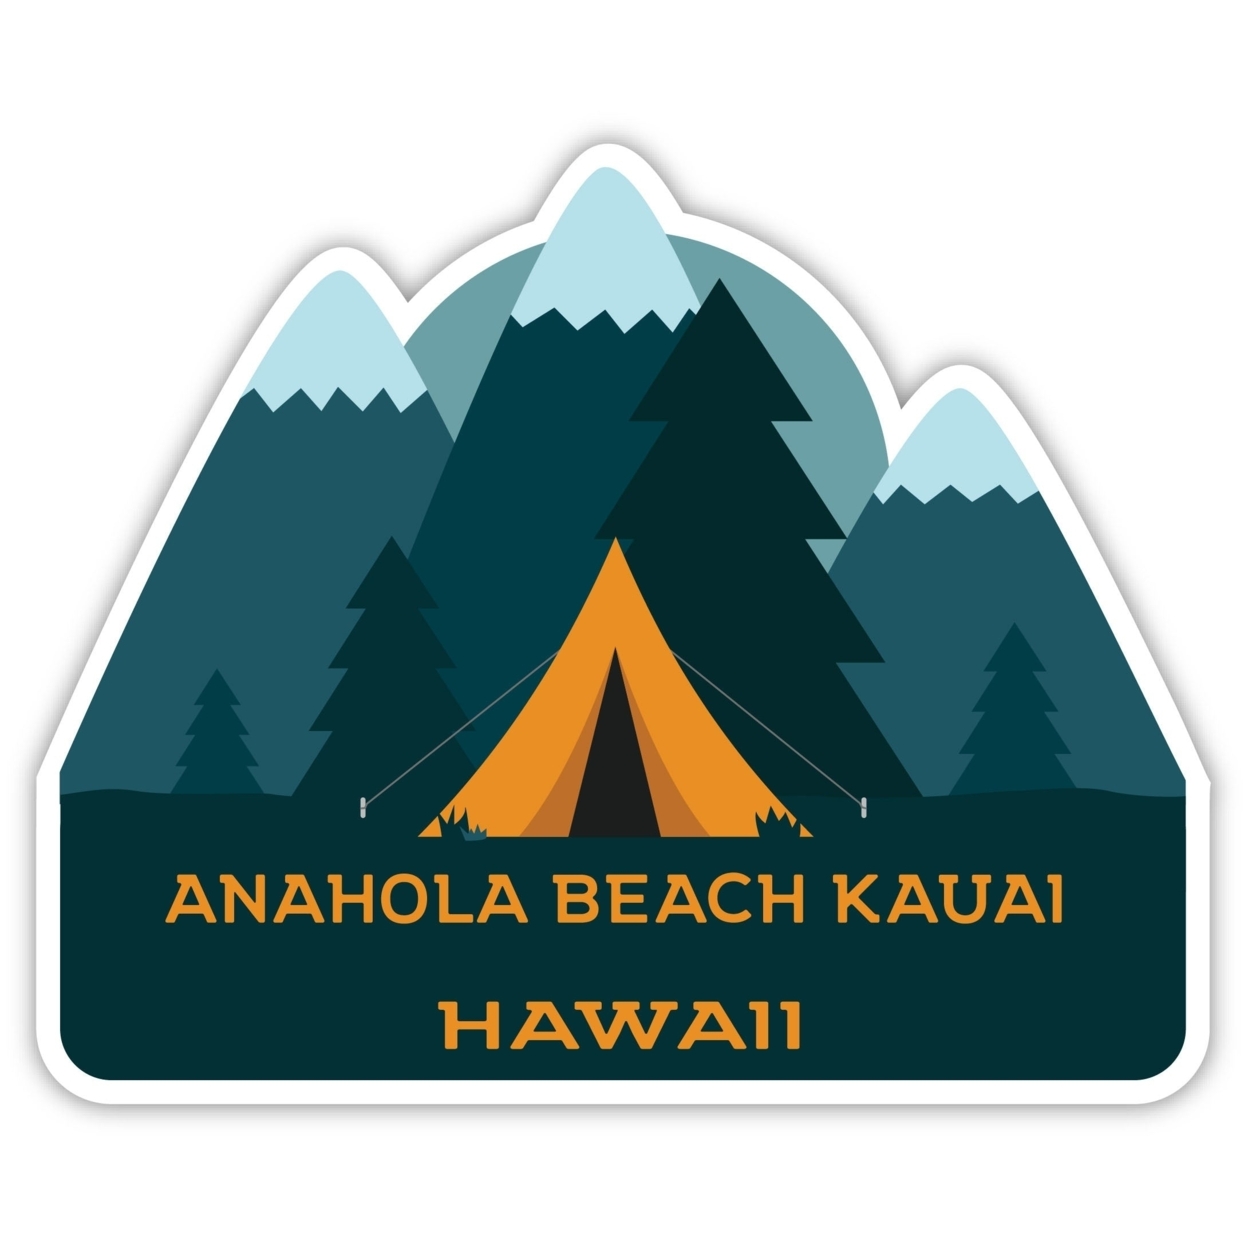 Anahola Beach Kauai Hawaii Souvenir Decorative Stickers (Choose Theme And Size) - 4-Pack, 6-Inch, Tent